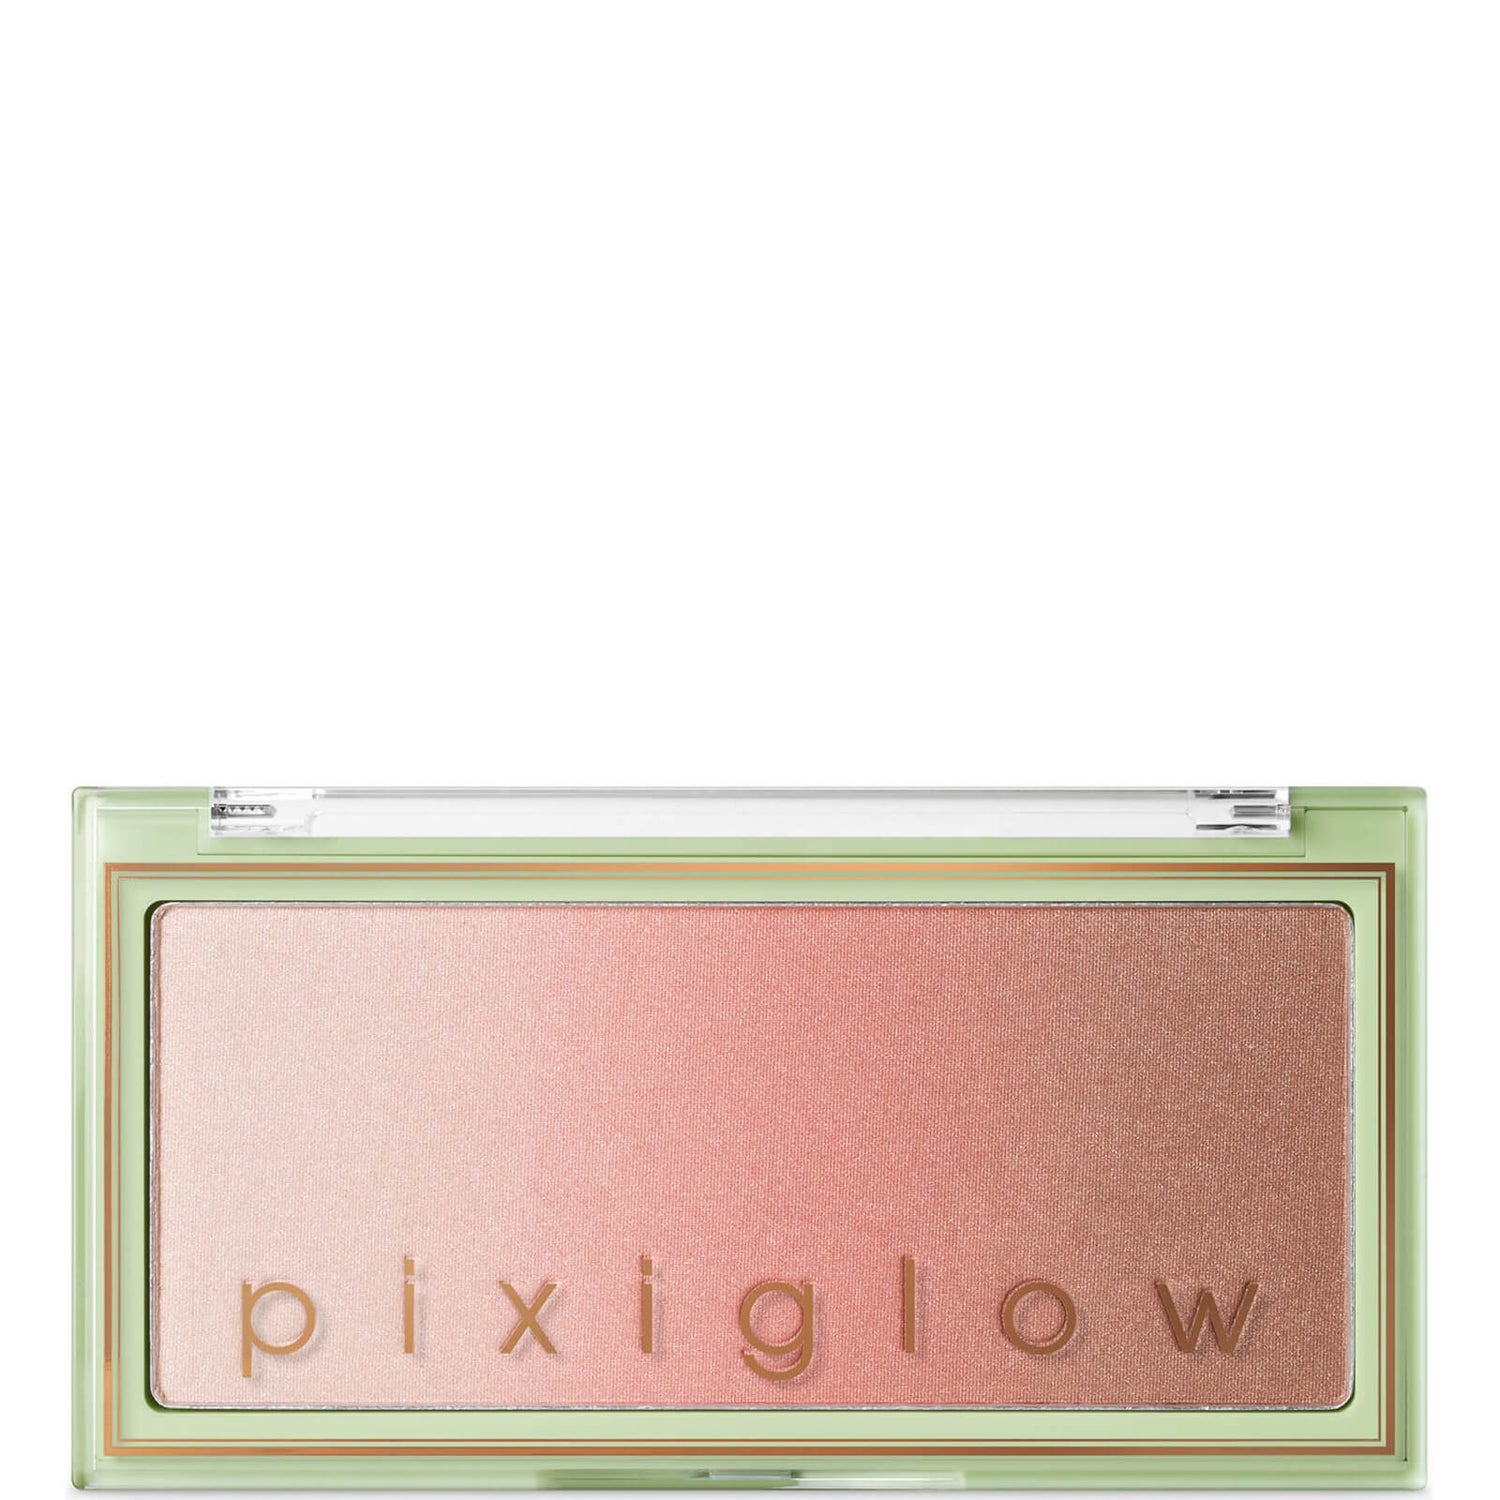 PIXI GLOW Cake Blush - Gilded Bare Glow 24g